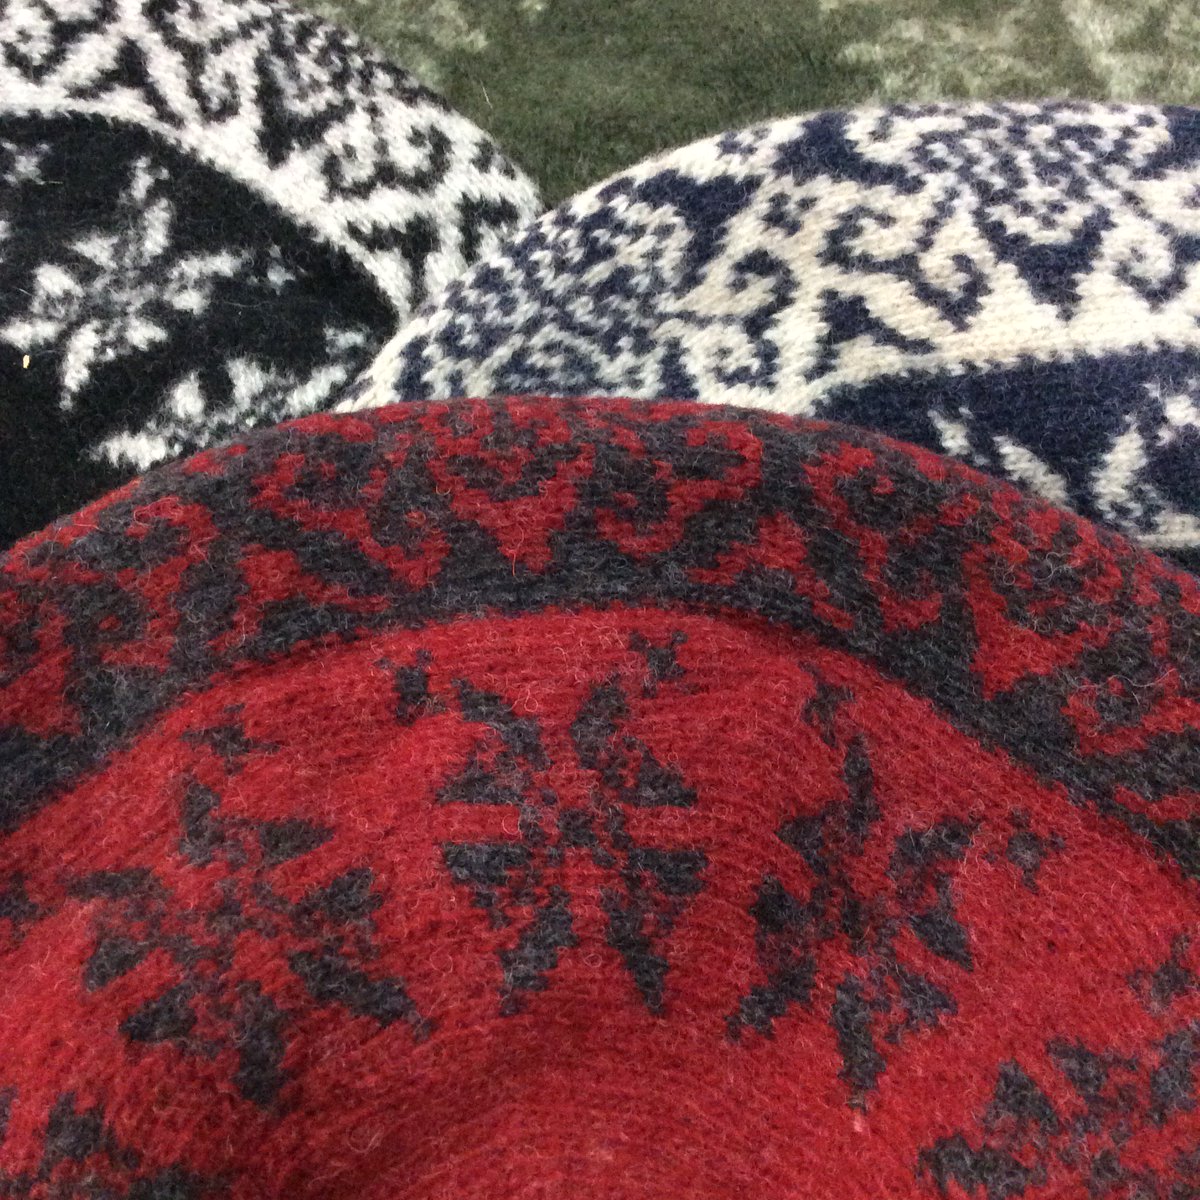 New Pure Wool Beret  #instoreonly @fabhatrix #hatshop  #shopindie #fairisledesign #beret  @GrassmarketEdin